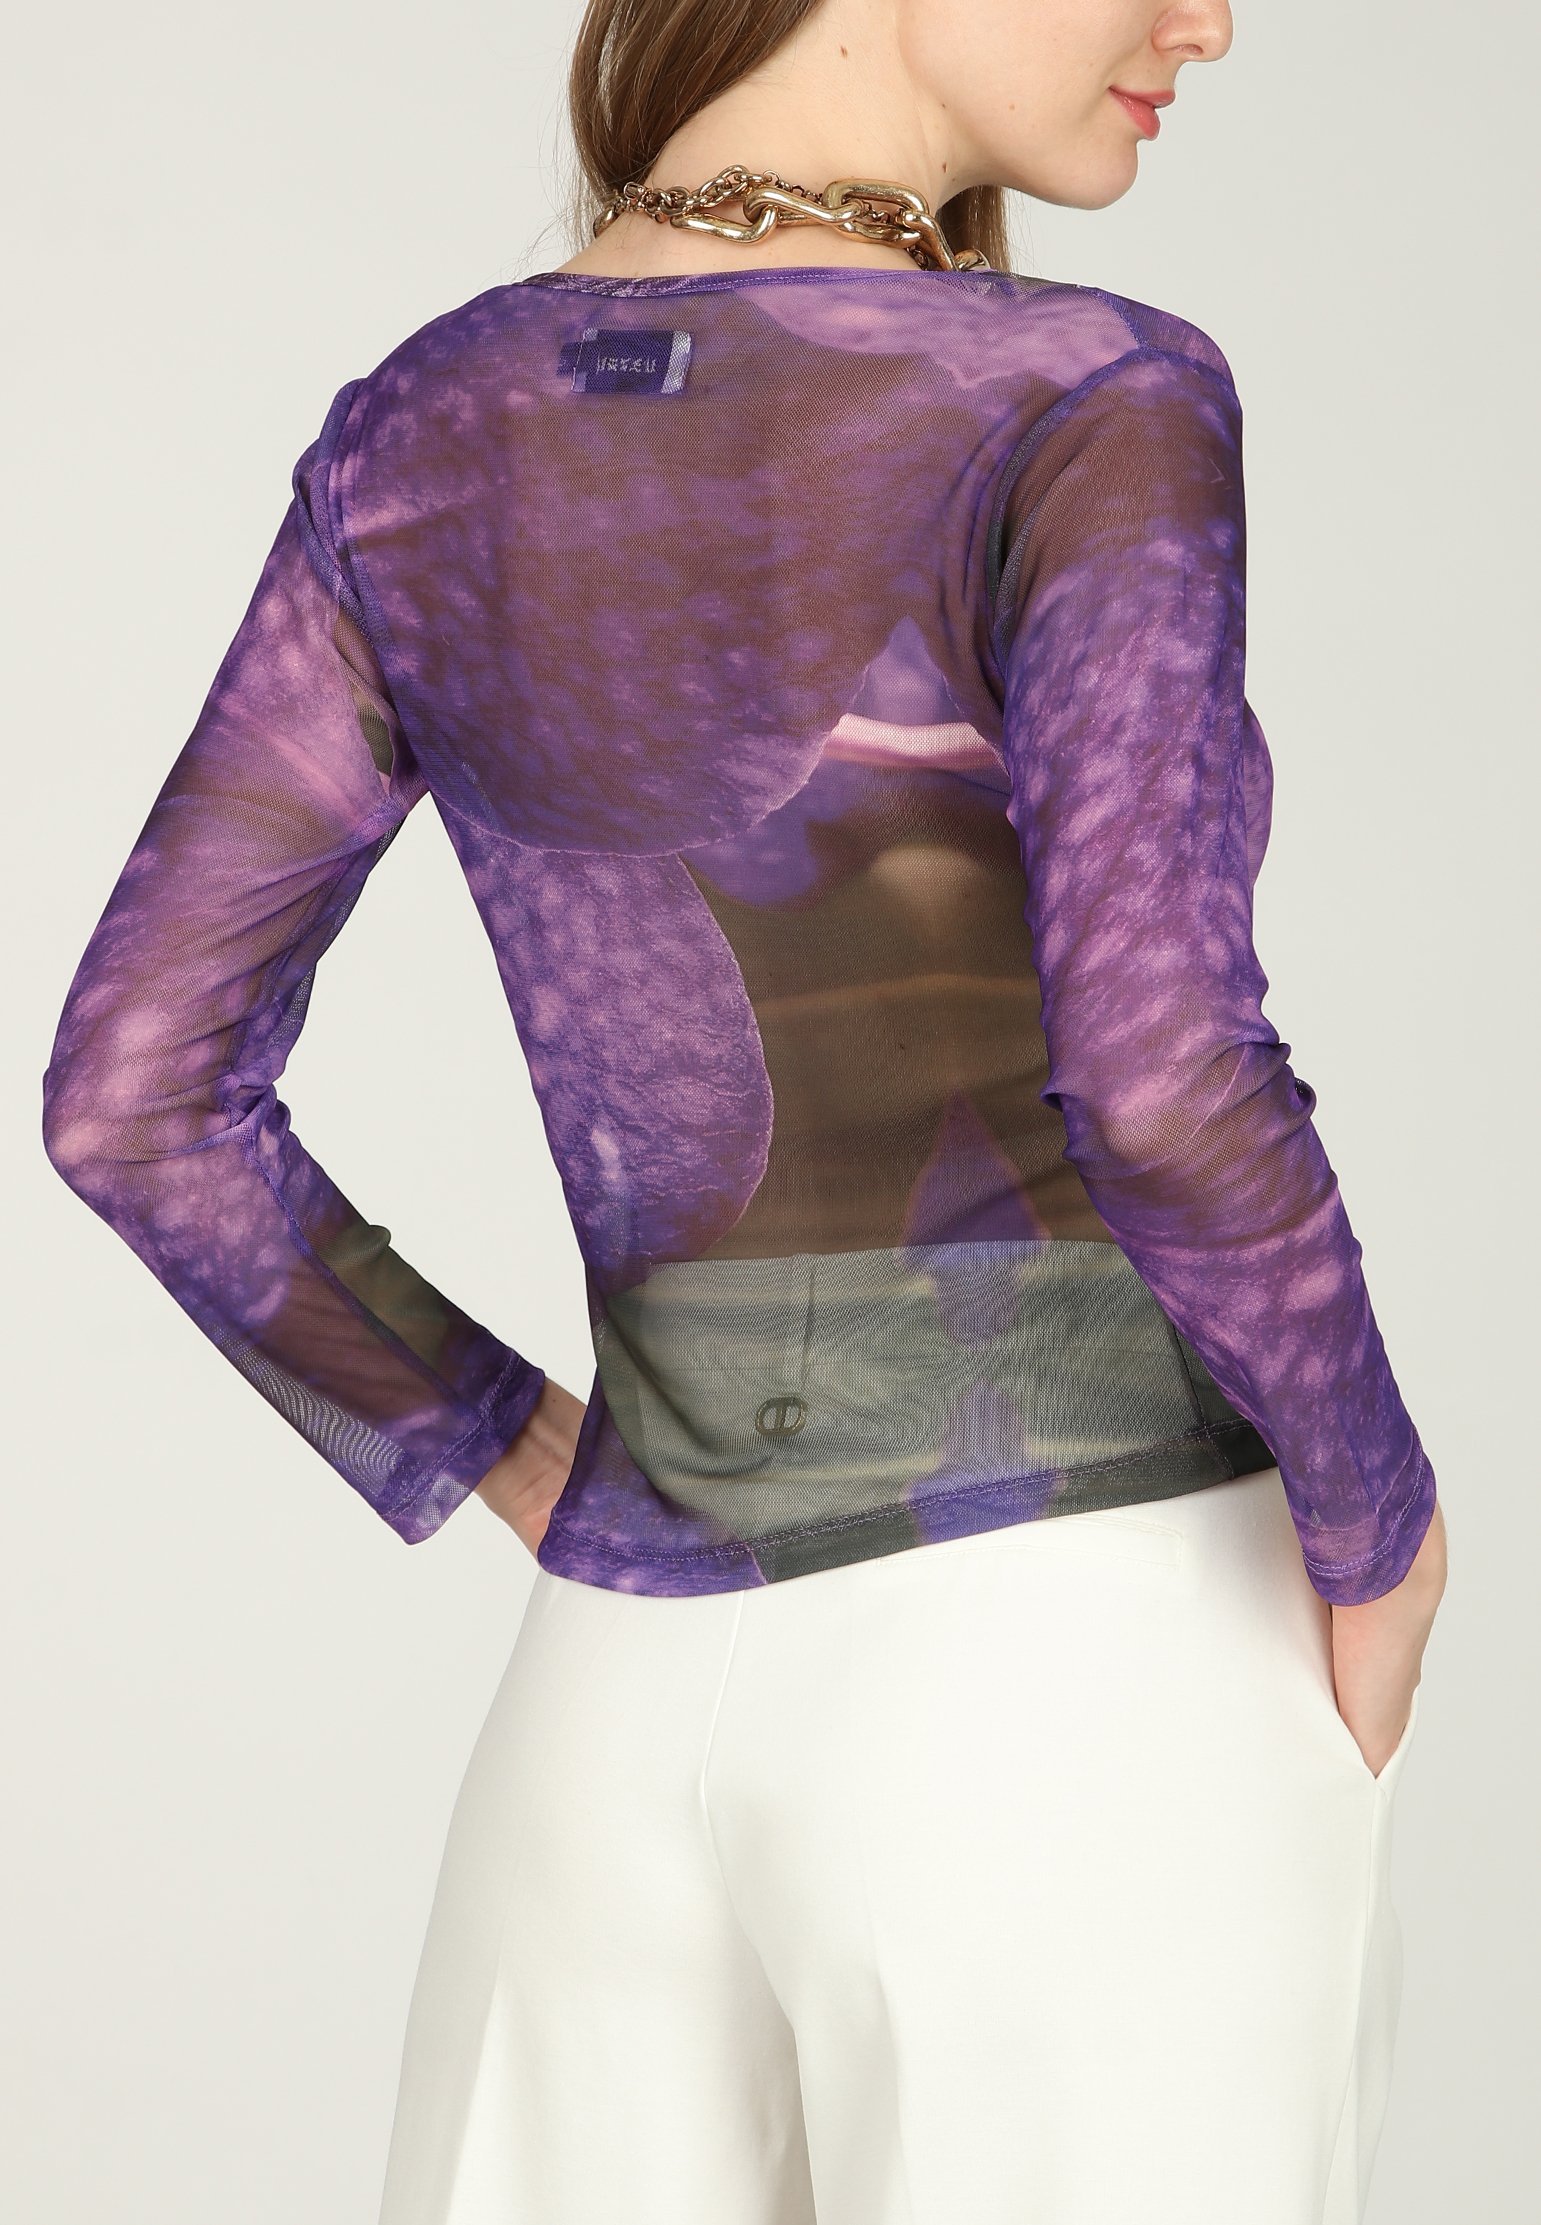 Blouse ALESSA Color: violet (Code: 3266) in online store Allure